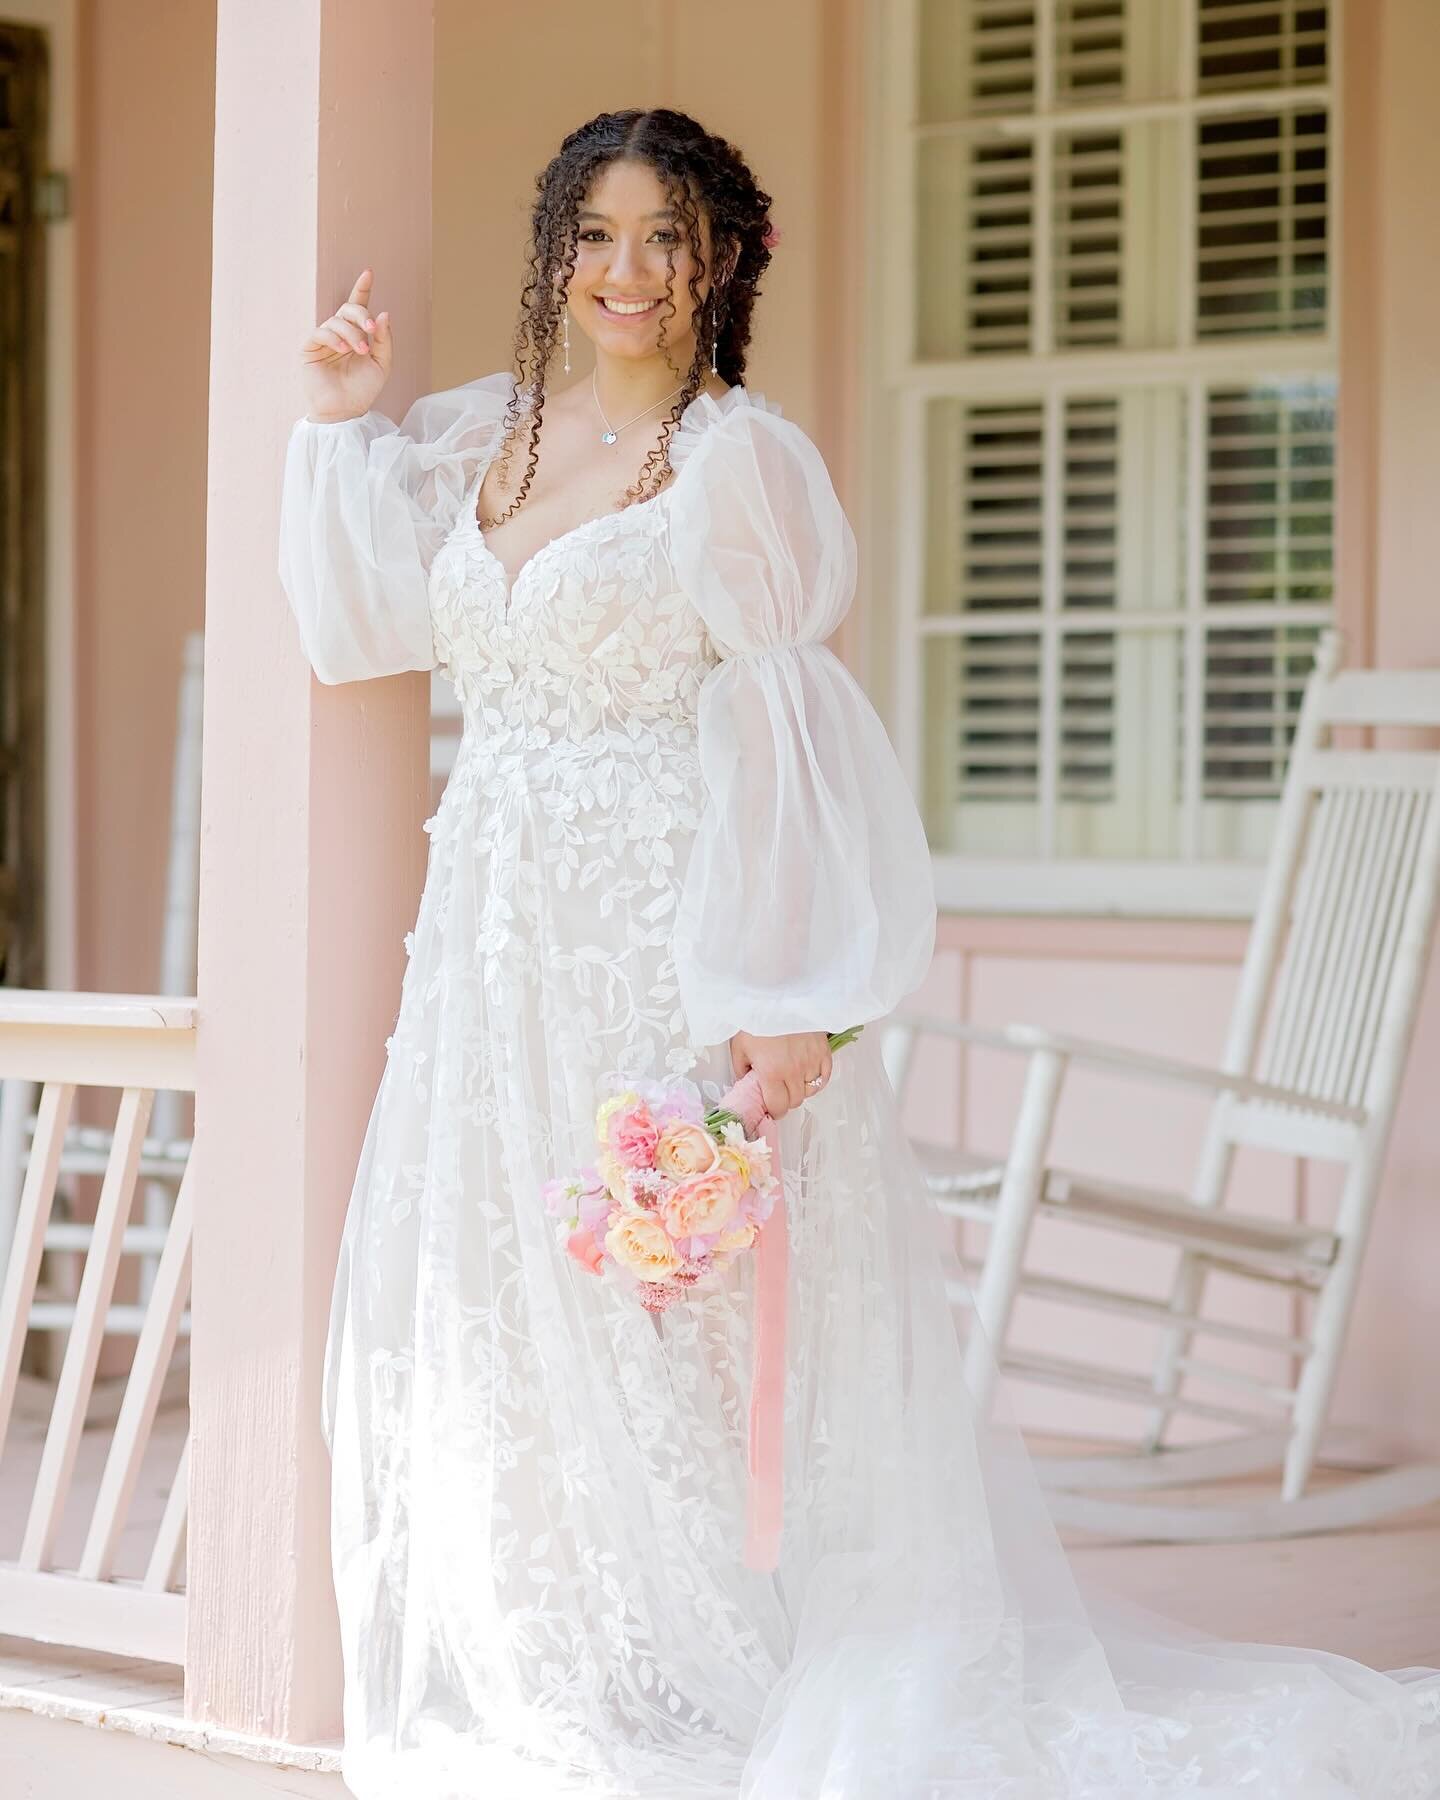 Blushing Bride 🤍

Photography: @robinrogersphotography 
Dress: @celebrationsbridalandprom 
Hair + Makeup: @lipstickandlocksboerne 
Florals: @bluebonnetfieldsfloral 

#bride #springwedding #blush #blushingbride #ranchwedding #weddingvenue #weddingins